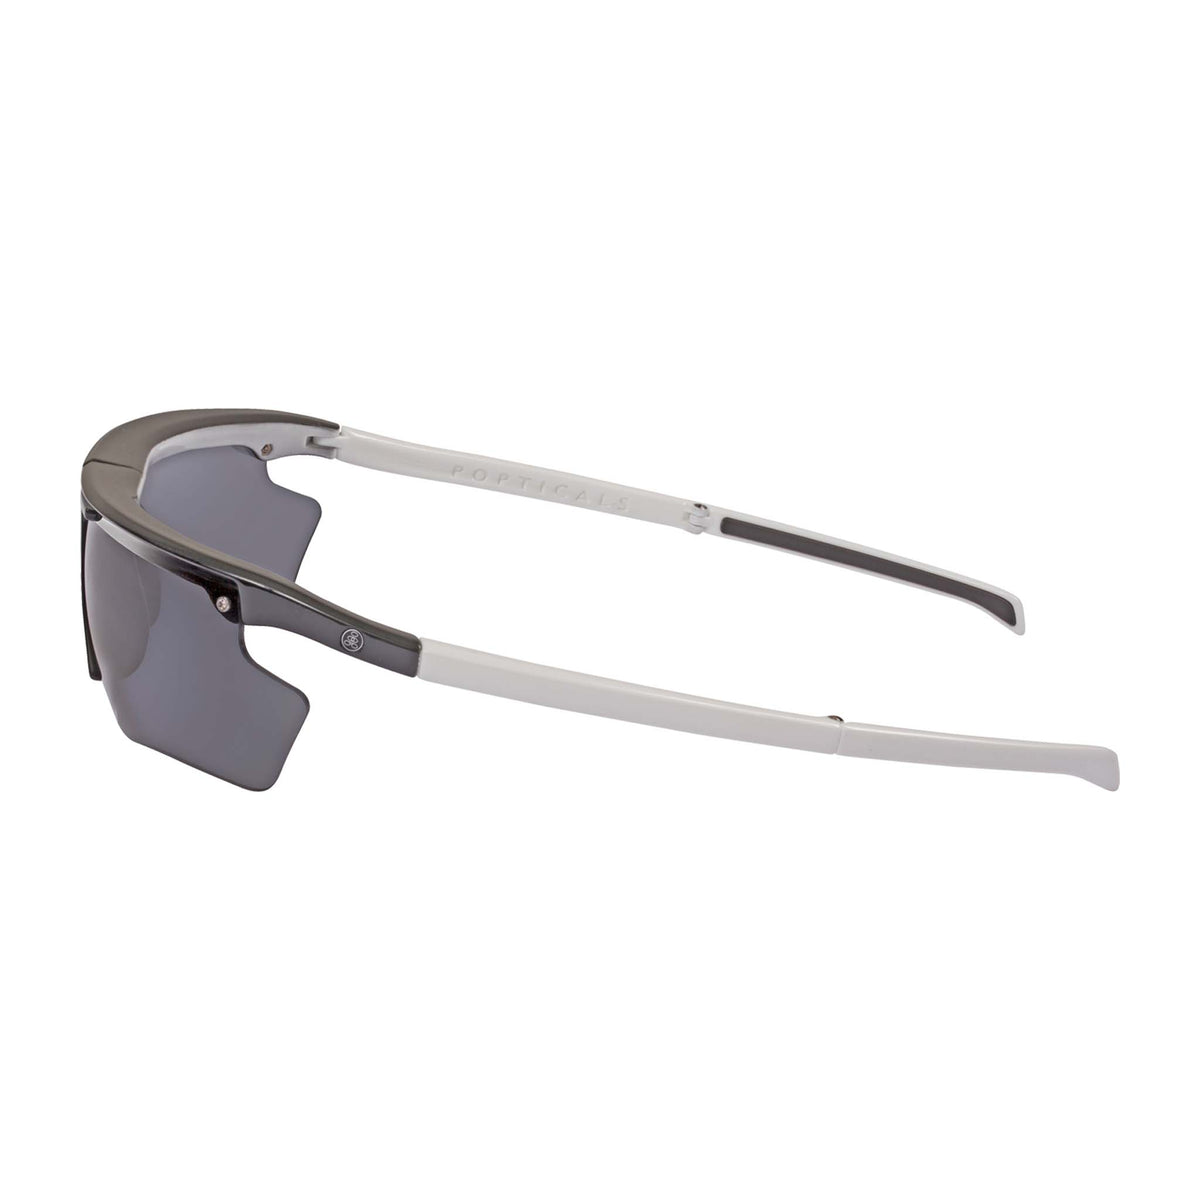 Popticals, Premium Compact Sunglasses, PopEdge, 010091-WGGP, Polarized Sunglasses, Gloss Black and White Frame, Gray Lenses, Side View